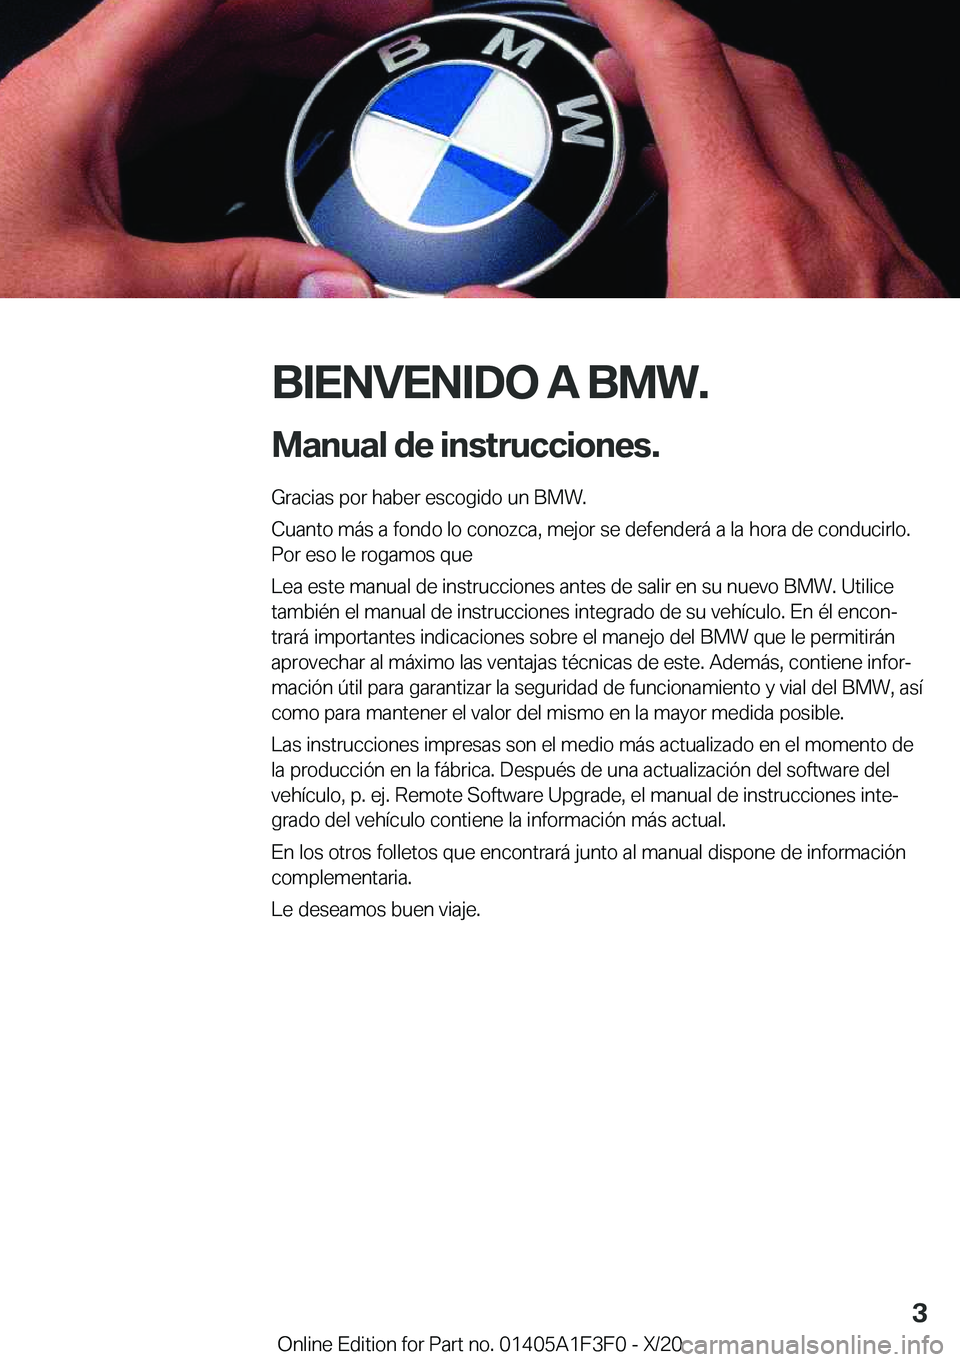 BMW X5 2021  Manuales de Empleo (in Spanish) �B�I�E�N�V�E�N�I�D�O��A��B�M�W�.
�M�a�n�u�a�l��d�e��i�n�s�t�r�u�c�c�i�o�n�e�s�. �G�r�a�c�i�a�s��p�o�r��h�a�b�e�r��e�s�c�o�g�i�d�o��u�n��B�M�W�.
�C�u�a�n�t�o��m�